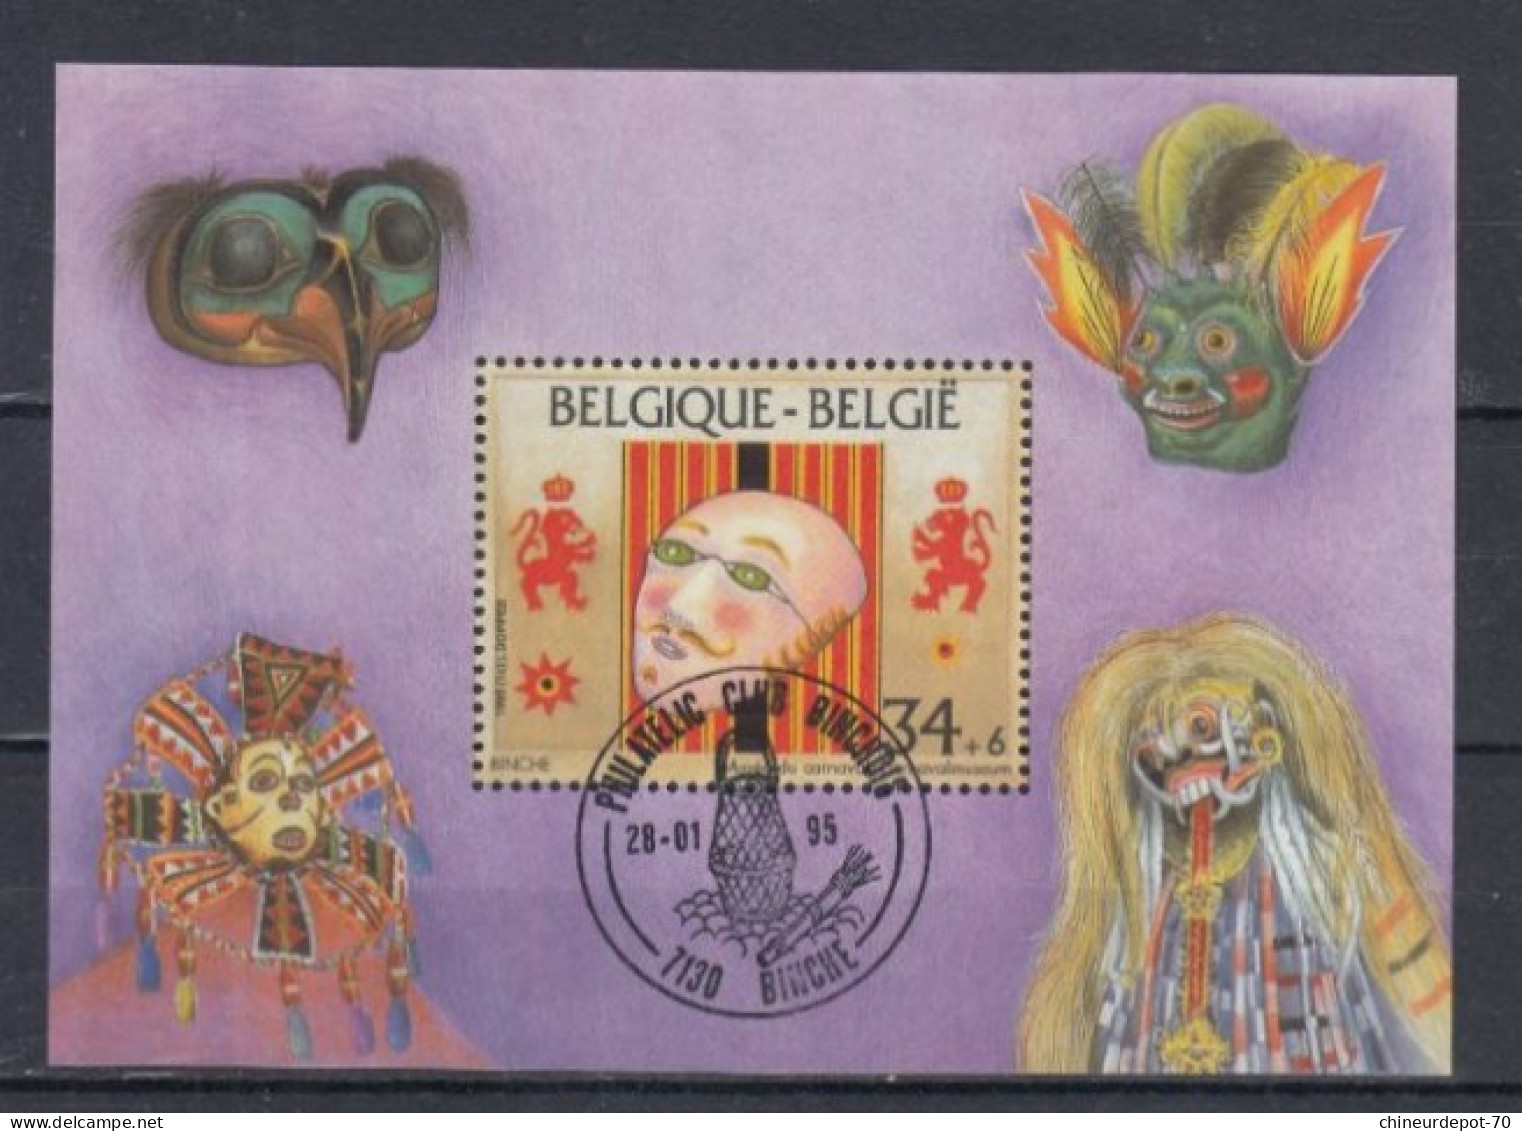 Belge BLOC MASQUE BINCHE 1995 - Used Stamps